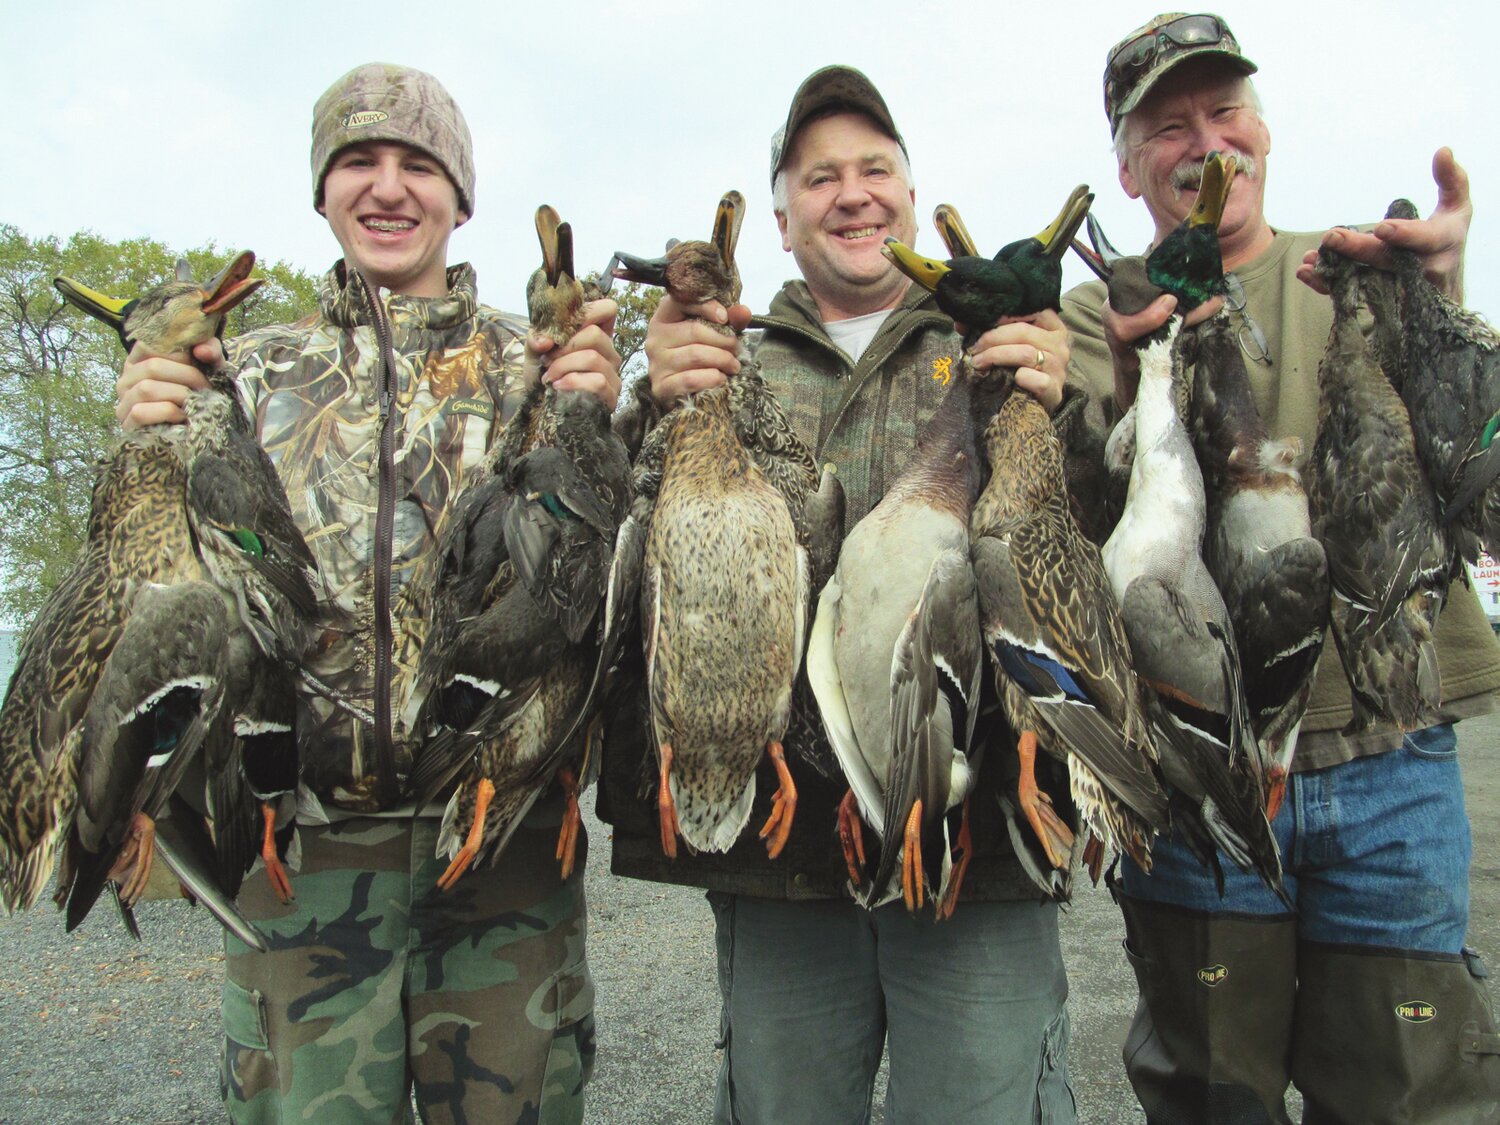 A successful duck hunt.
Courtesy John Kruse